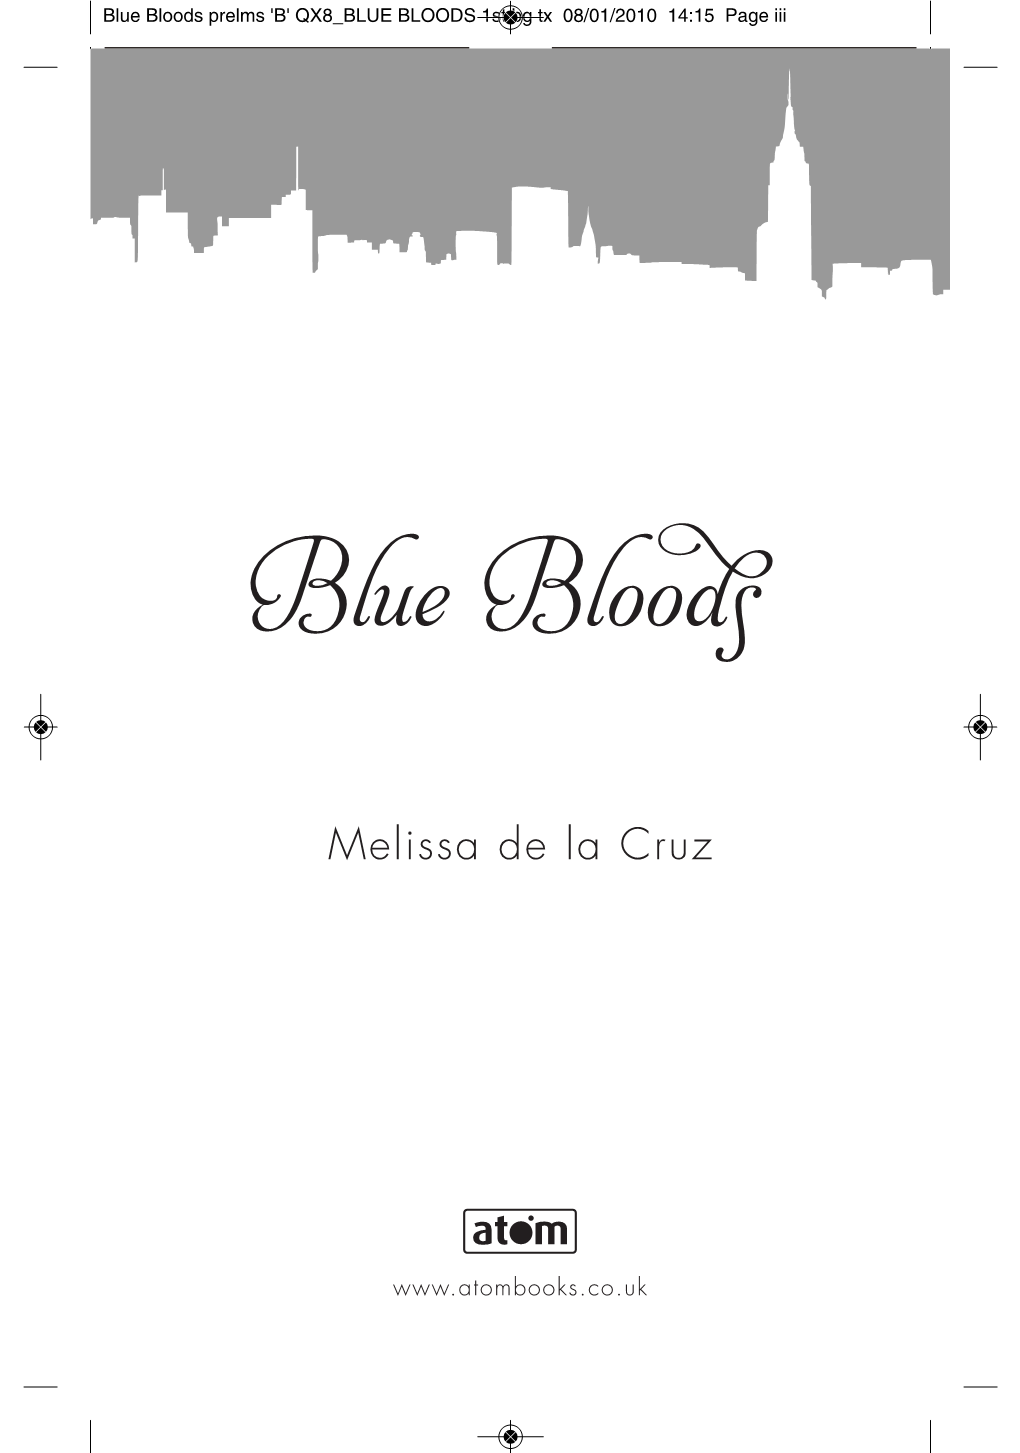 Blue Bloods Text QX8 BLUE BLOODS 1St Bg Tx 22/01/2010 10:51 Page 7